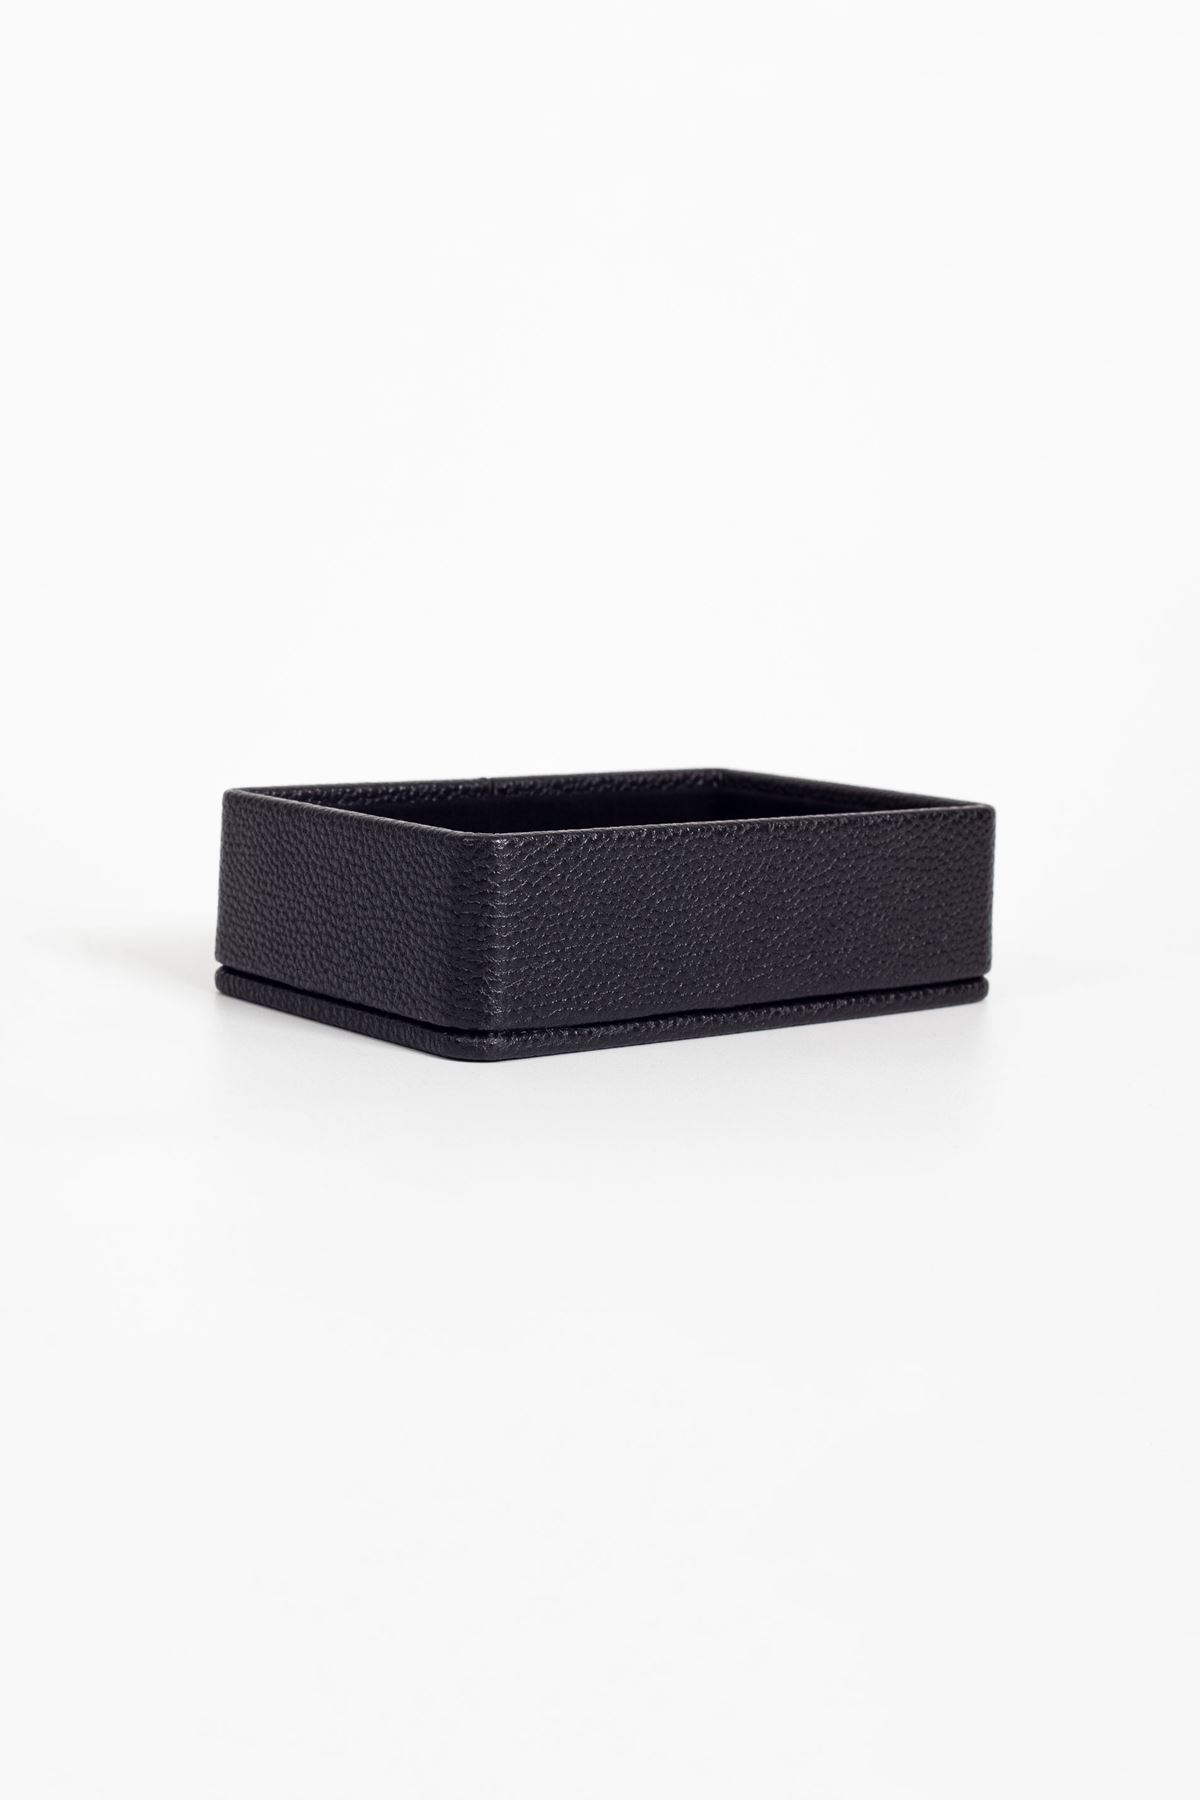 Felix Leather Accessory Box Black